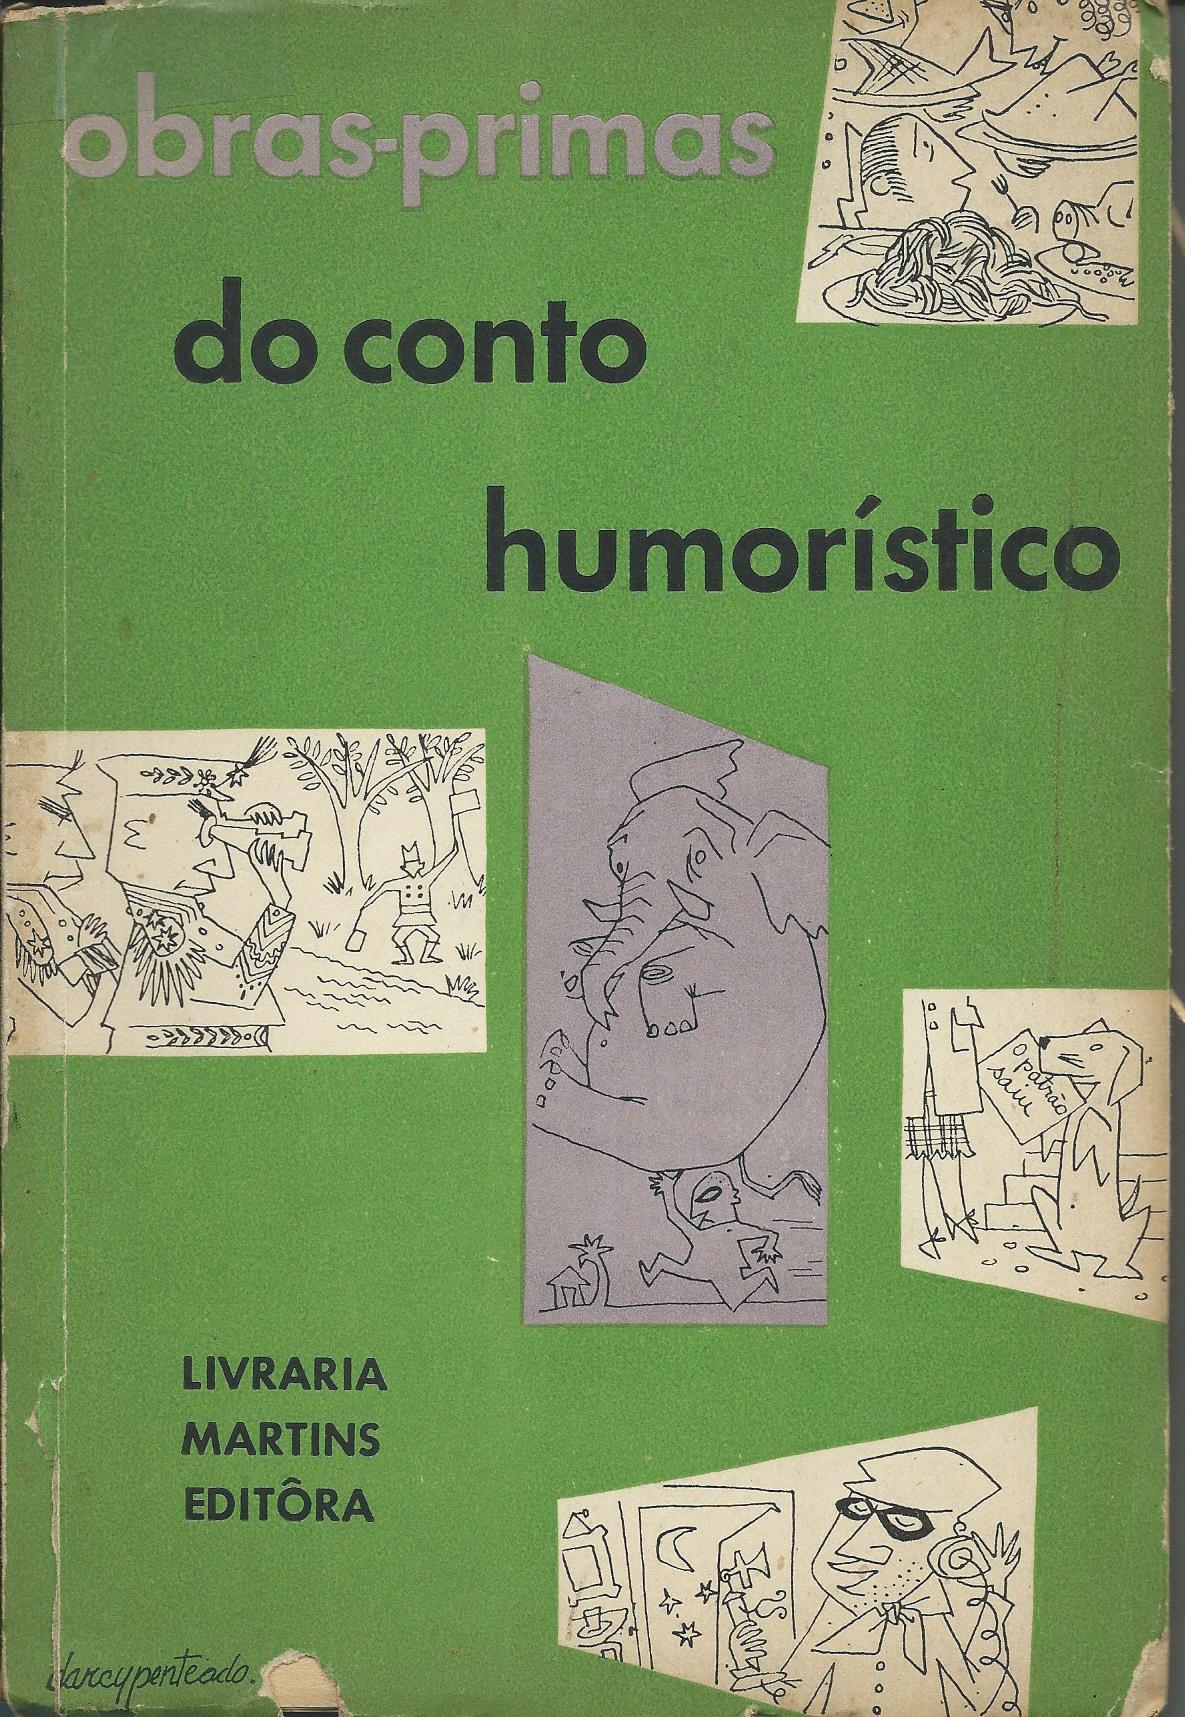 https://www.literaturabrasileira.ufsc.br/_images/obras/1453485188_10_obras_prima_do_conto_humoristico.jpg